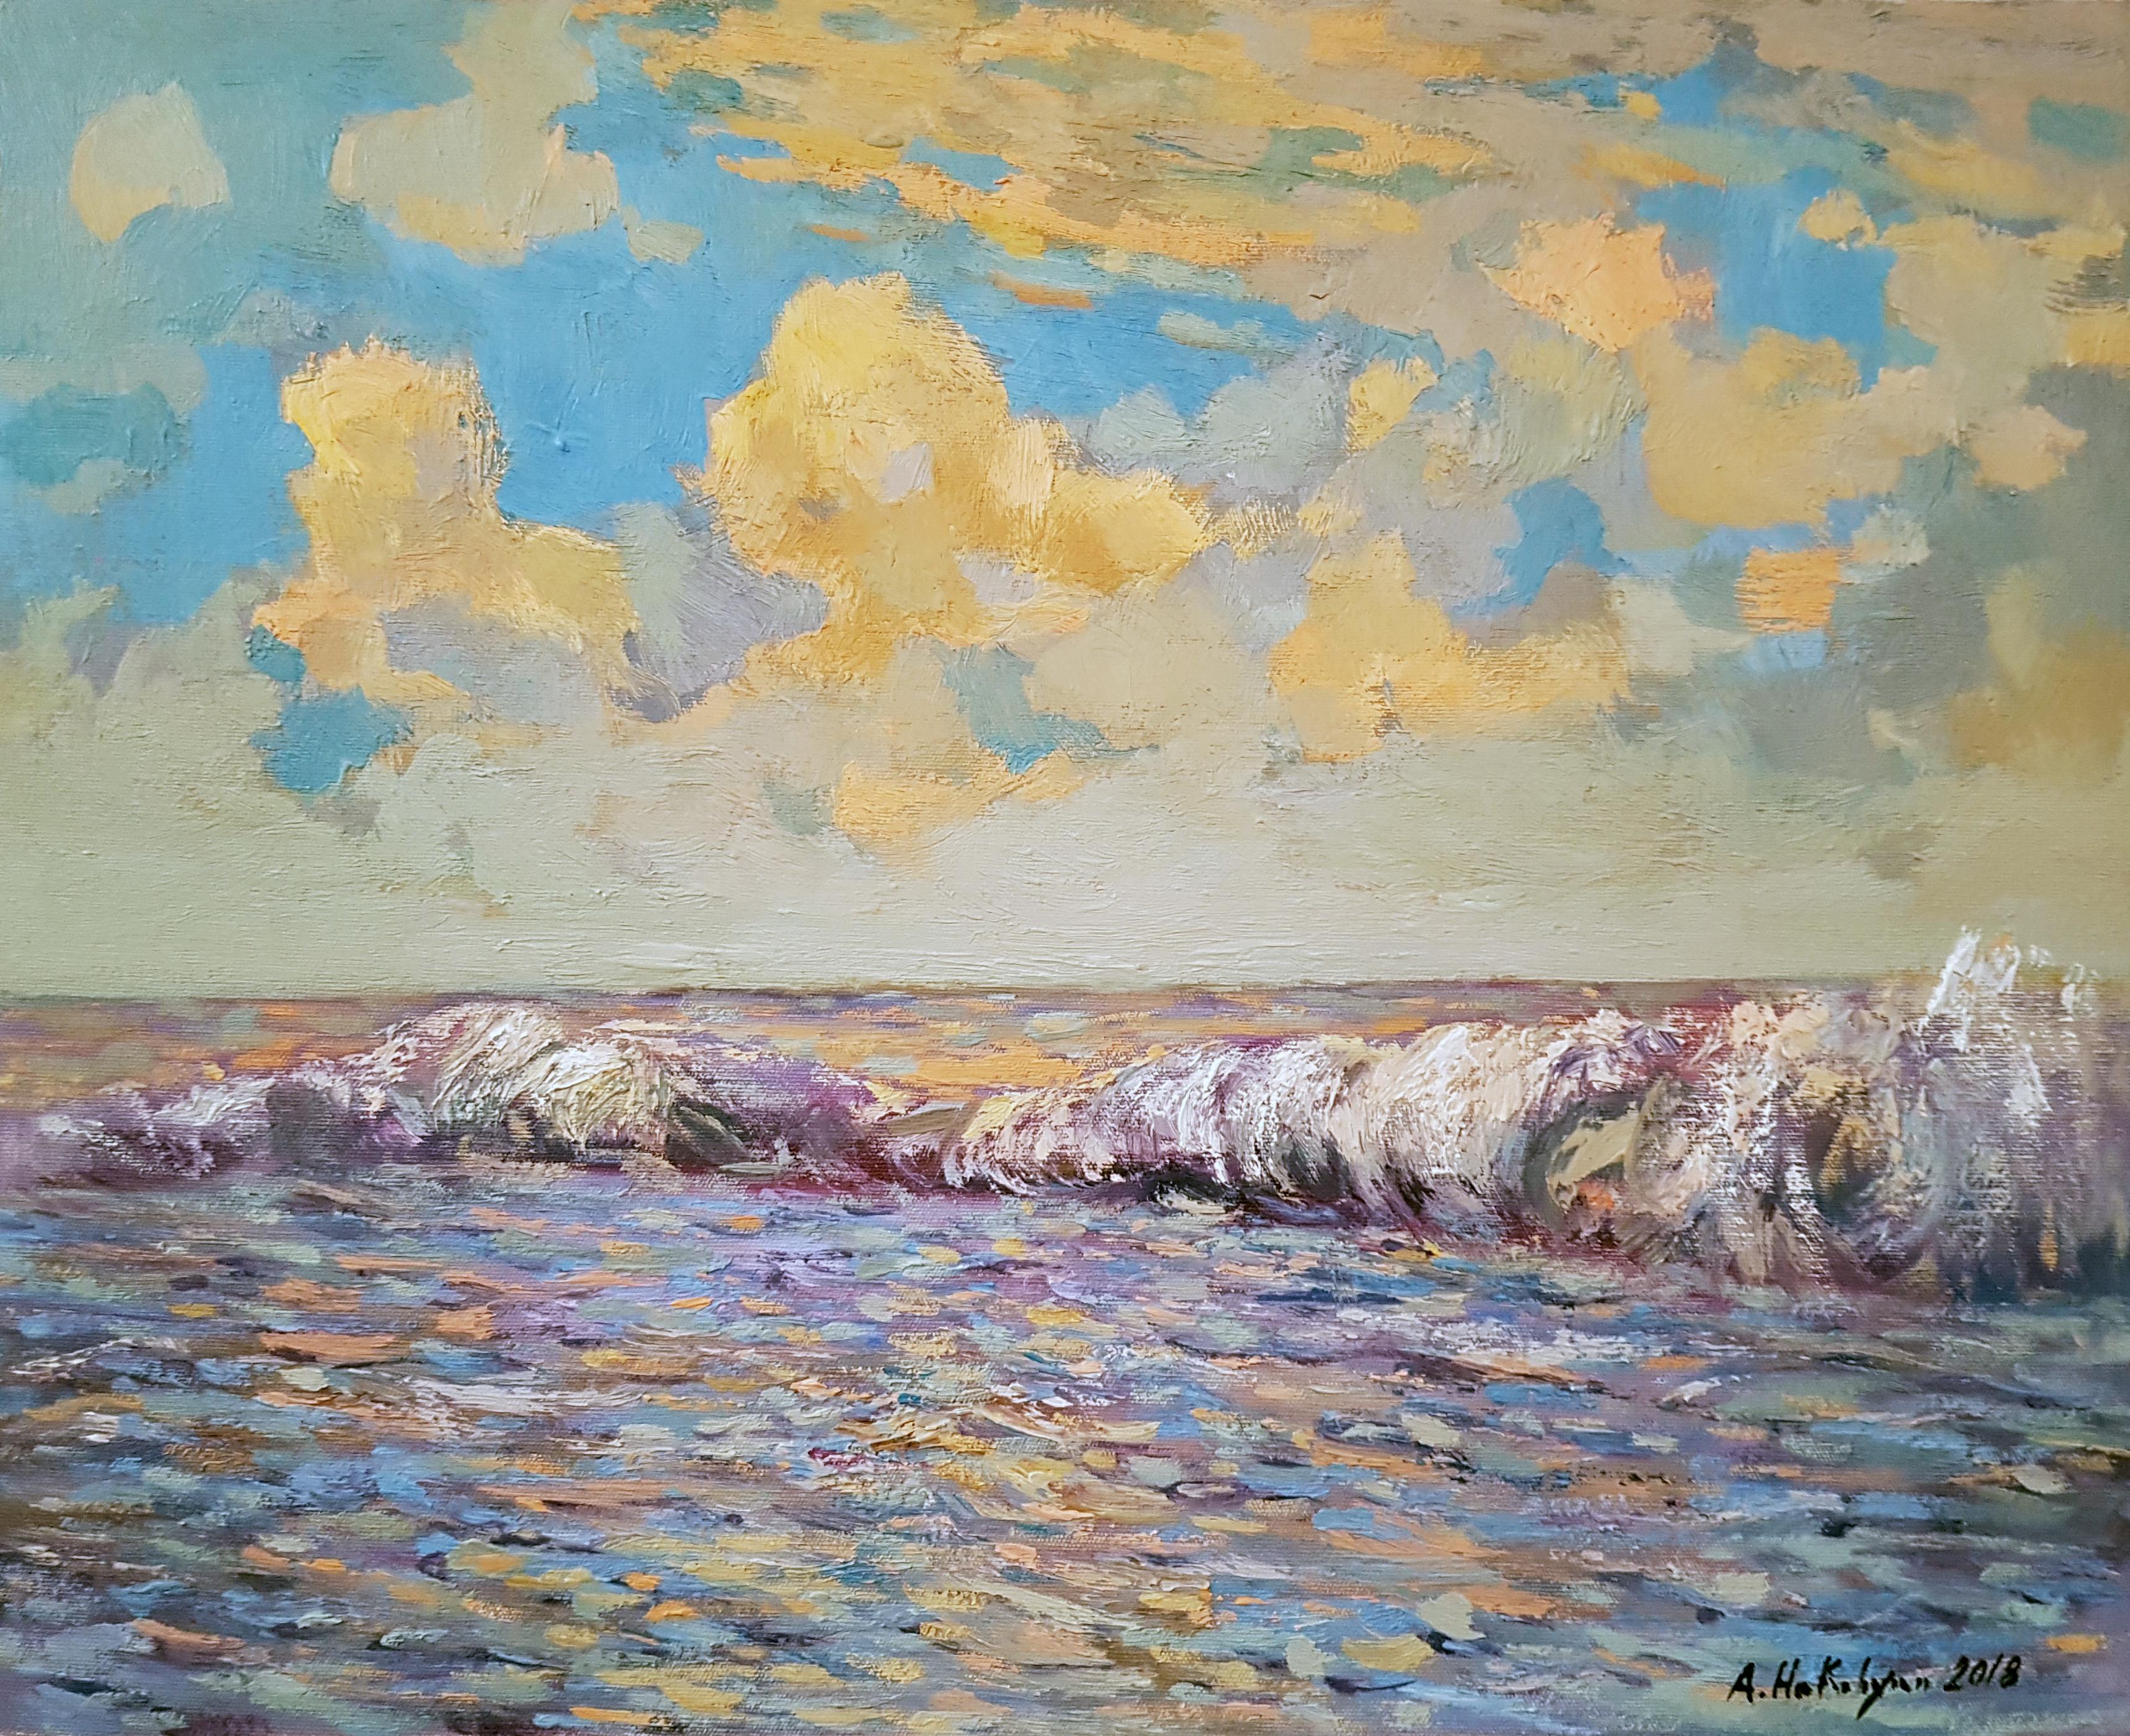 Ara H. Hakobyan Landscape Painting - The Wave, Coastal, Impressionism, Original Oil Painting, One of a Kind